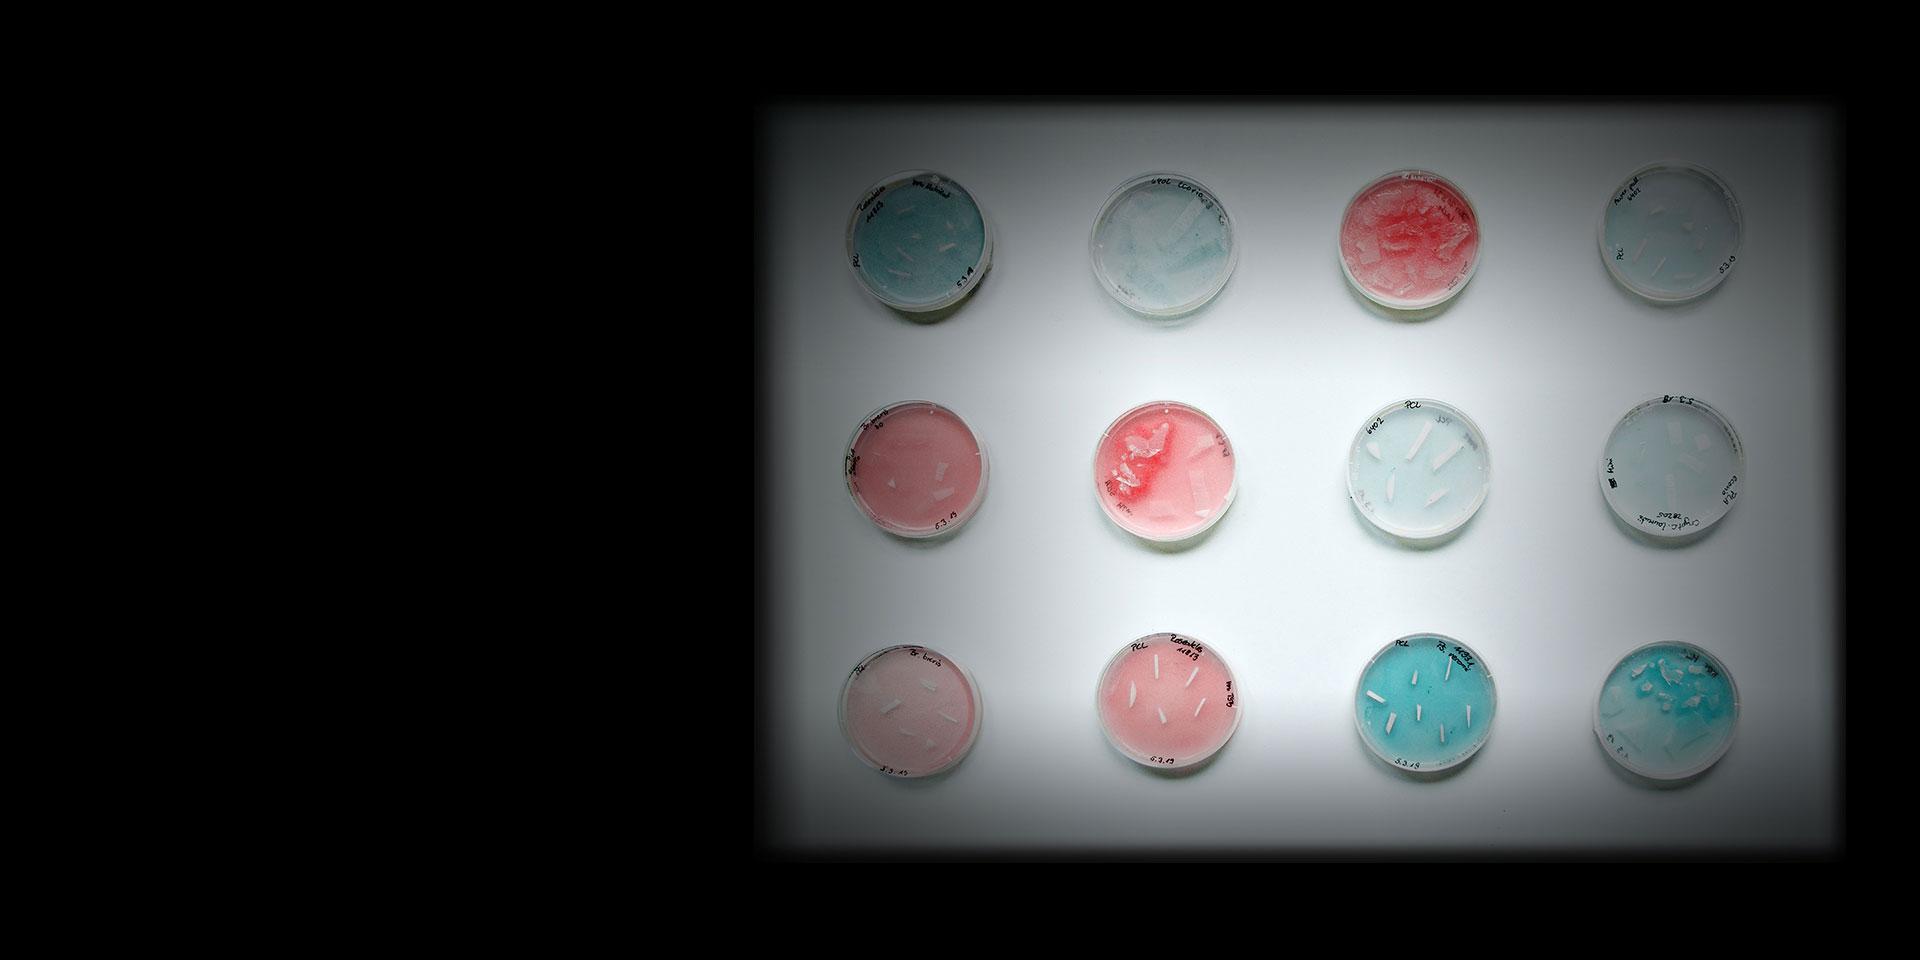 Microorganisms in Petri dishes